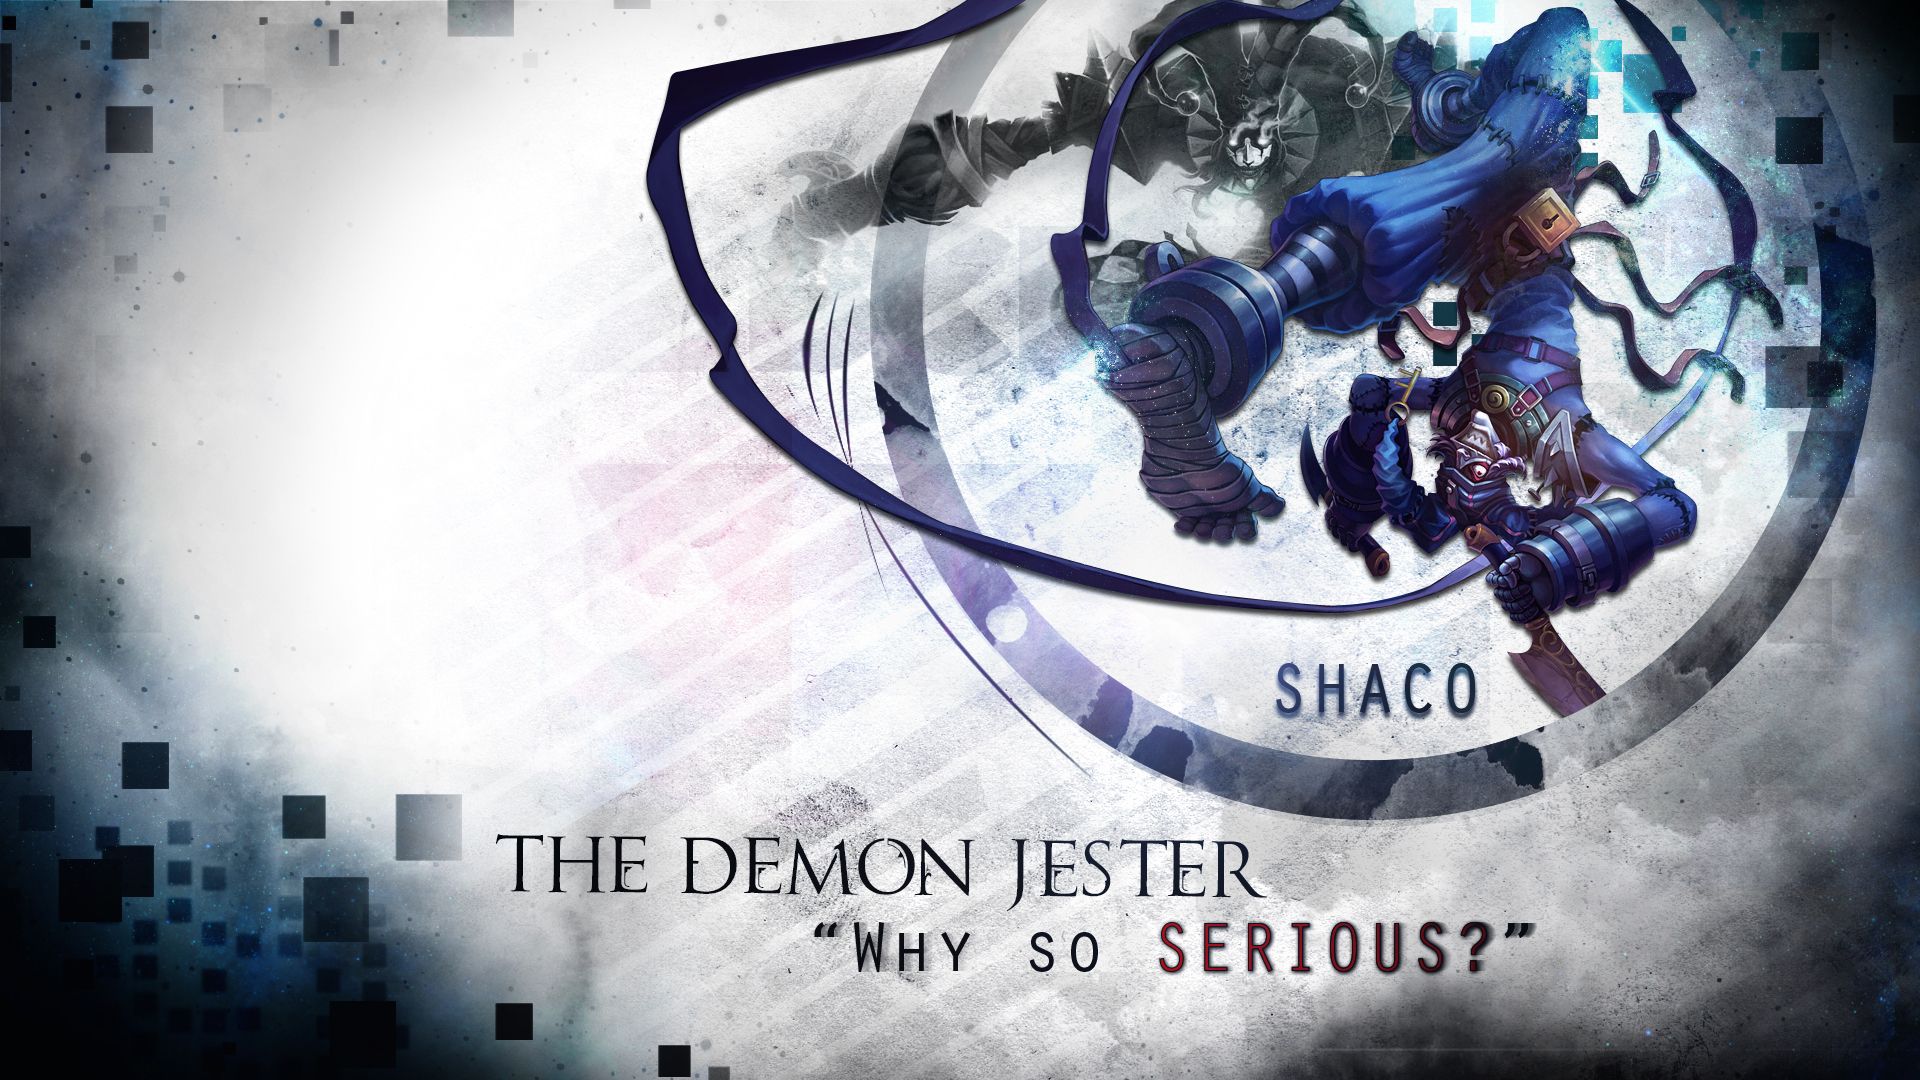 Shaco Demon Jester League of Legends wallpaper | 1920x1080 ...